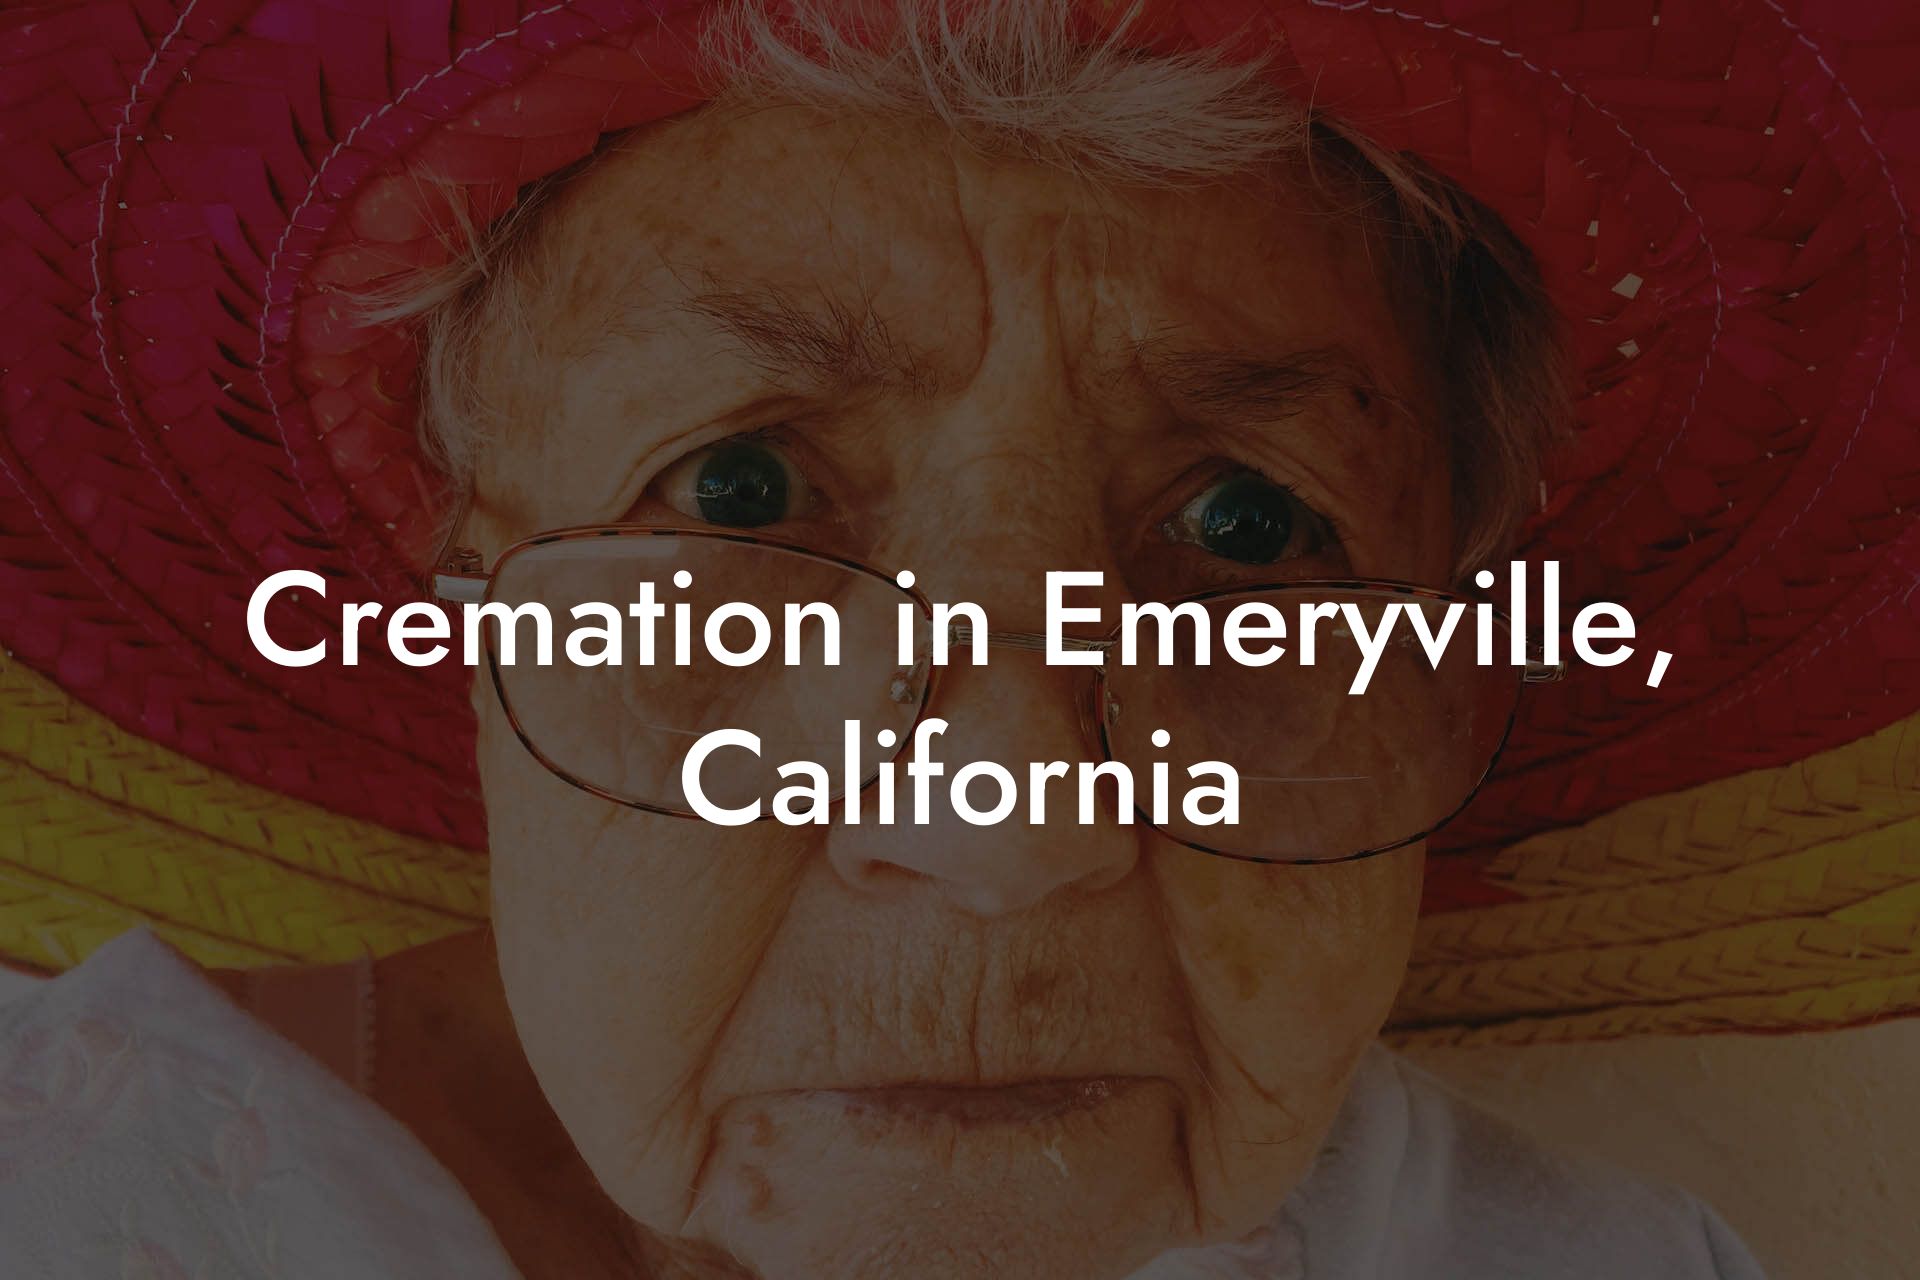 Cremation in Emeryville, California